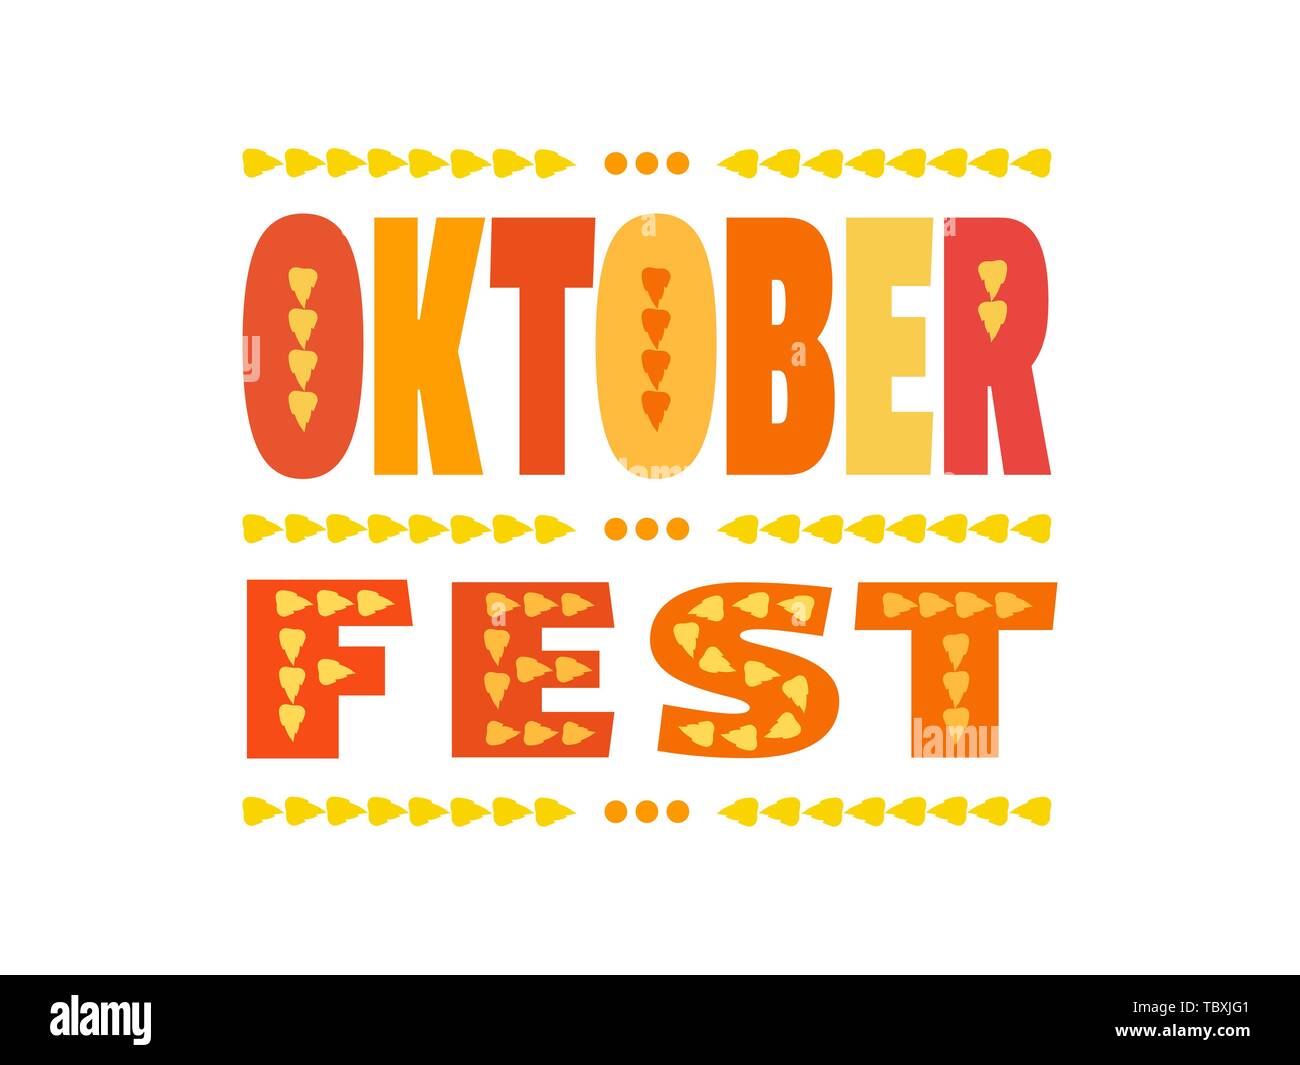 Oktoberfest hand drawn typographic design element Stock Vector